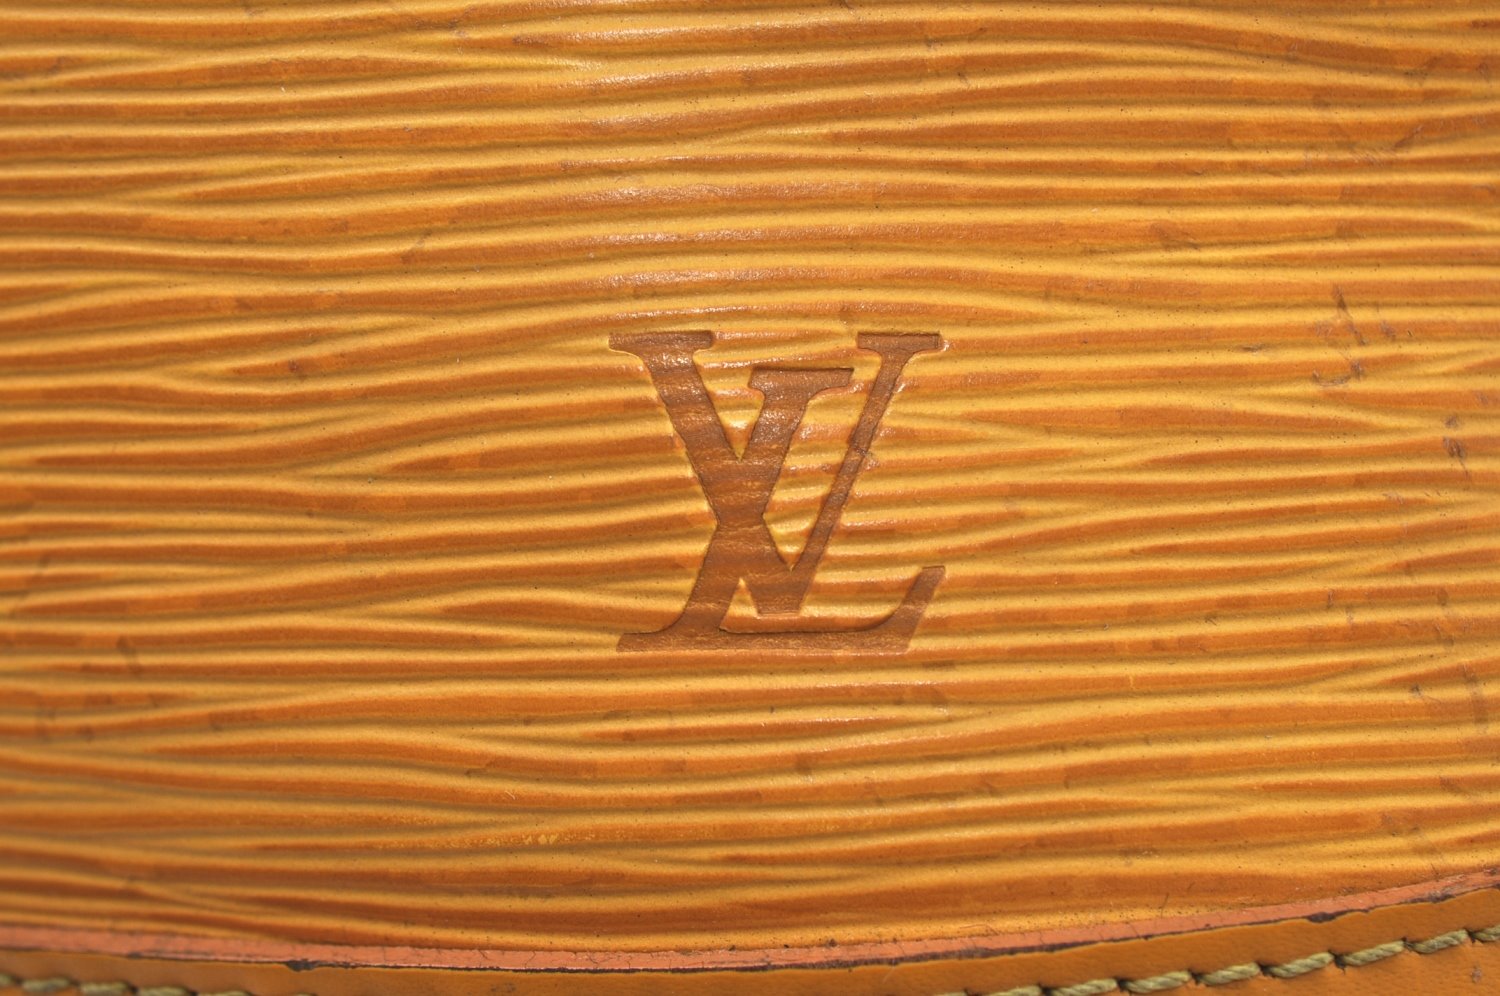 Authentic Louis Vuitton Epi Alma PM Hand Bag Yellow M52149 LV K9991